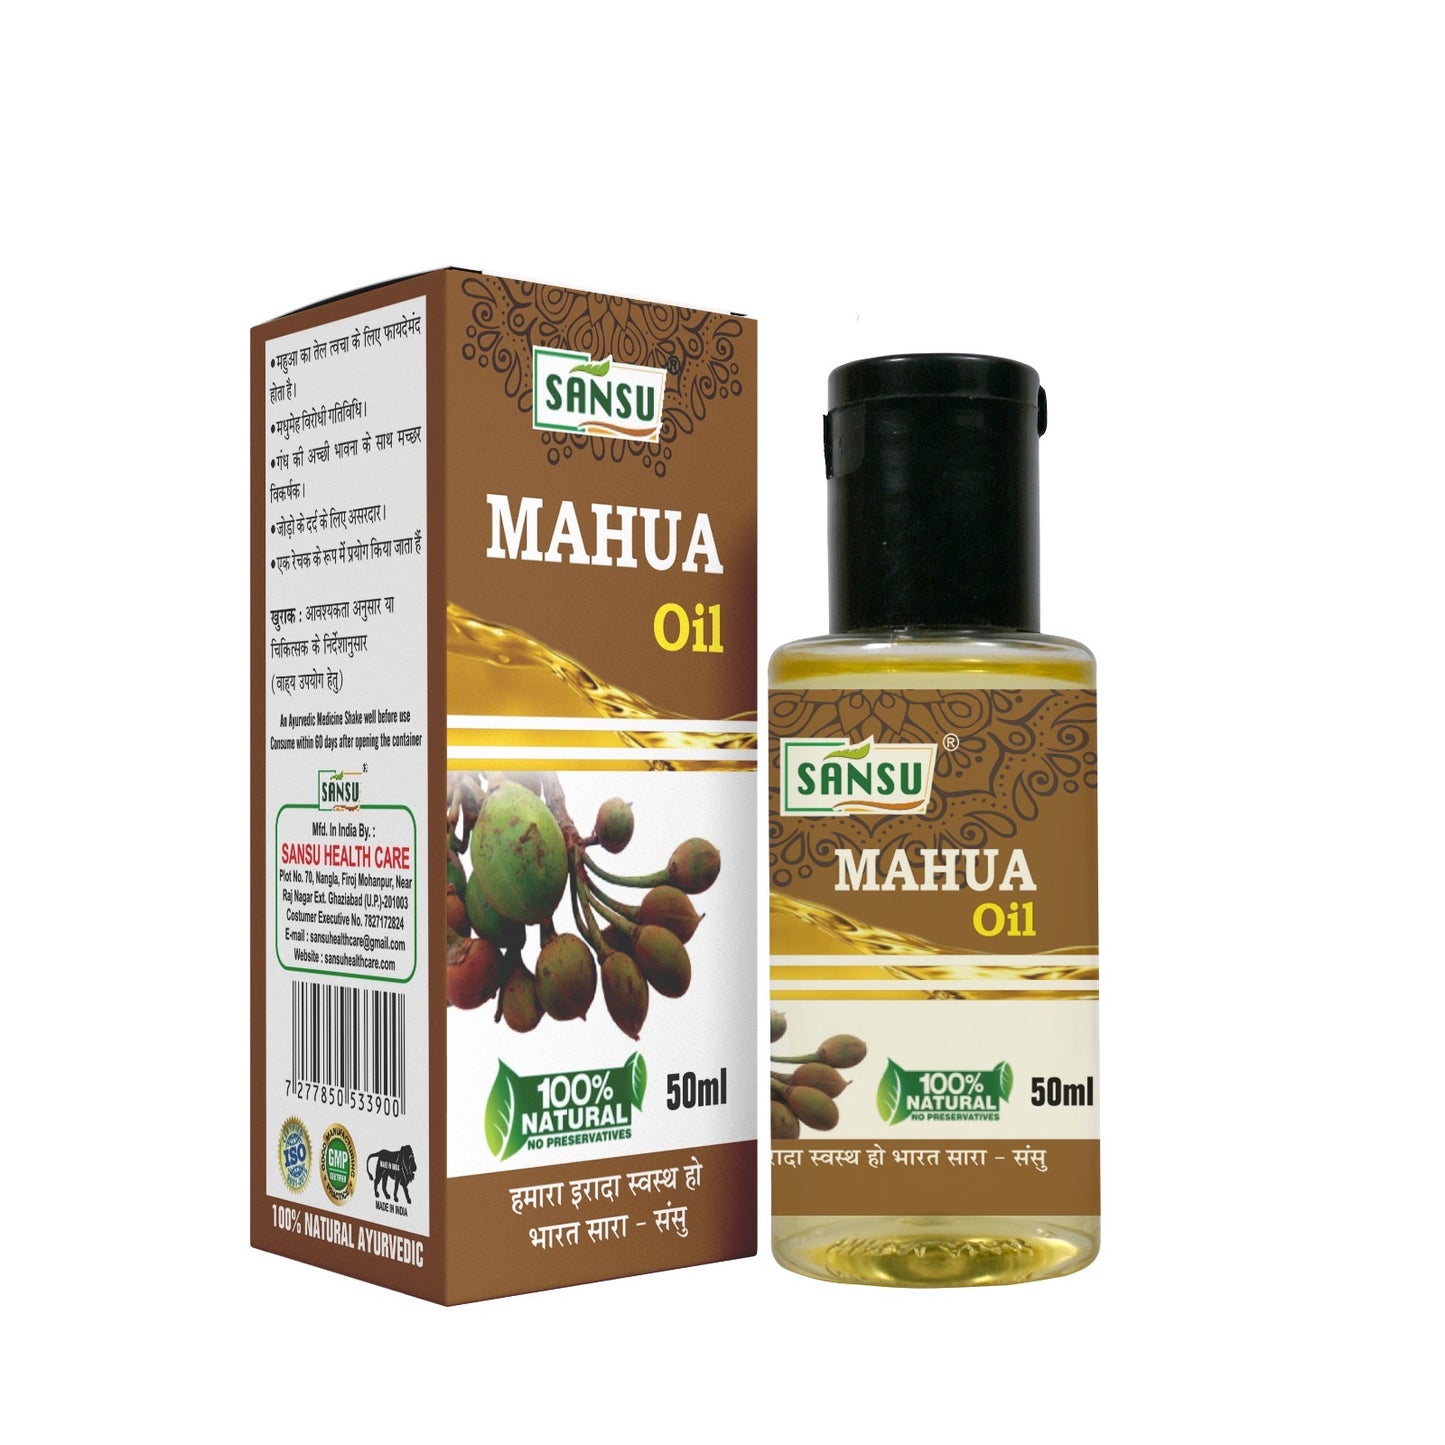 SANSU Mahua Oil | 50ML Pack of 2 (50mlx2)